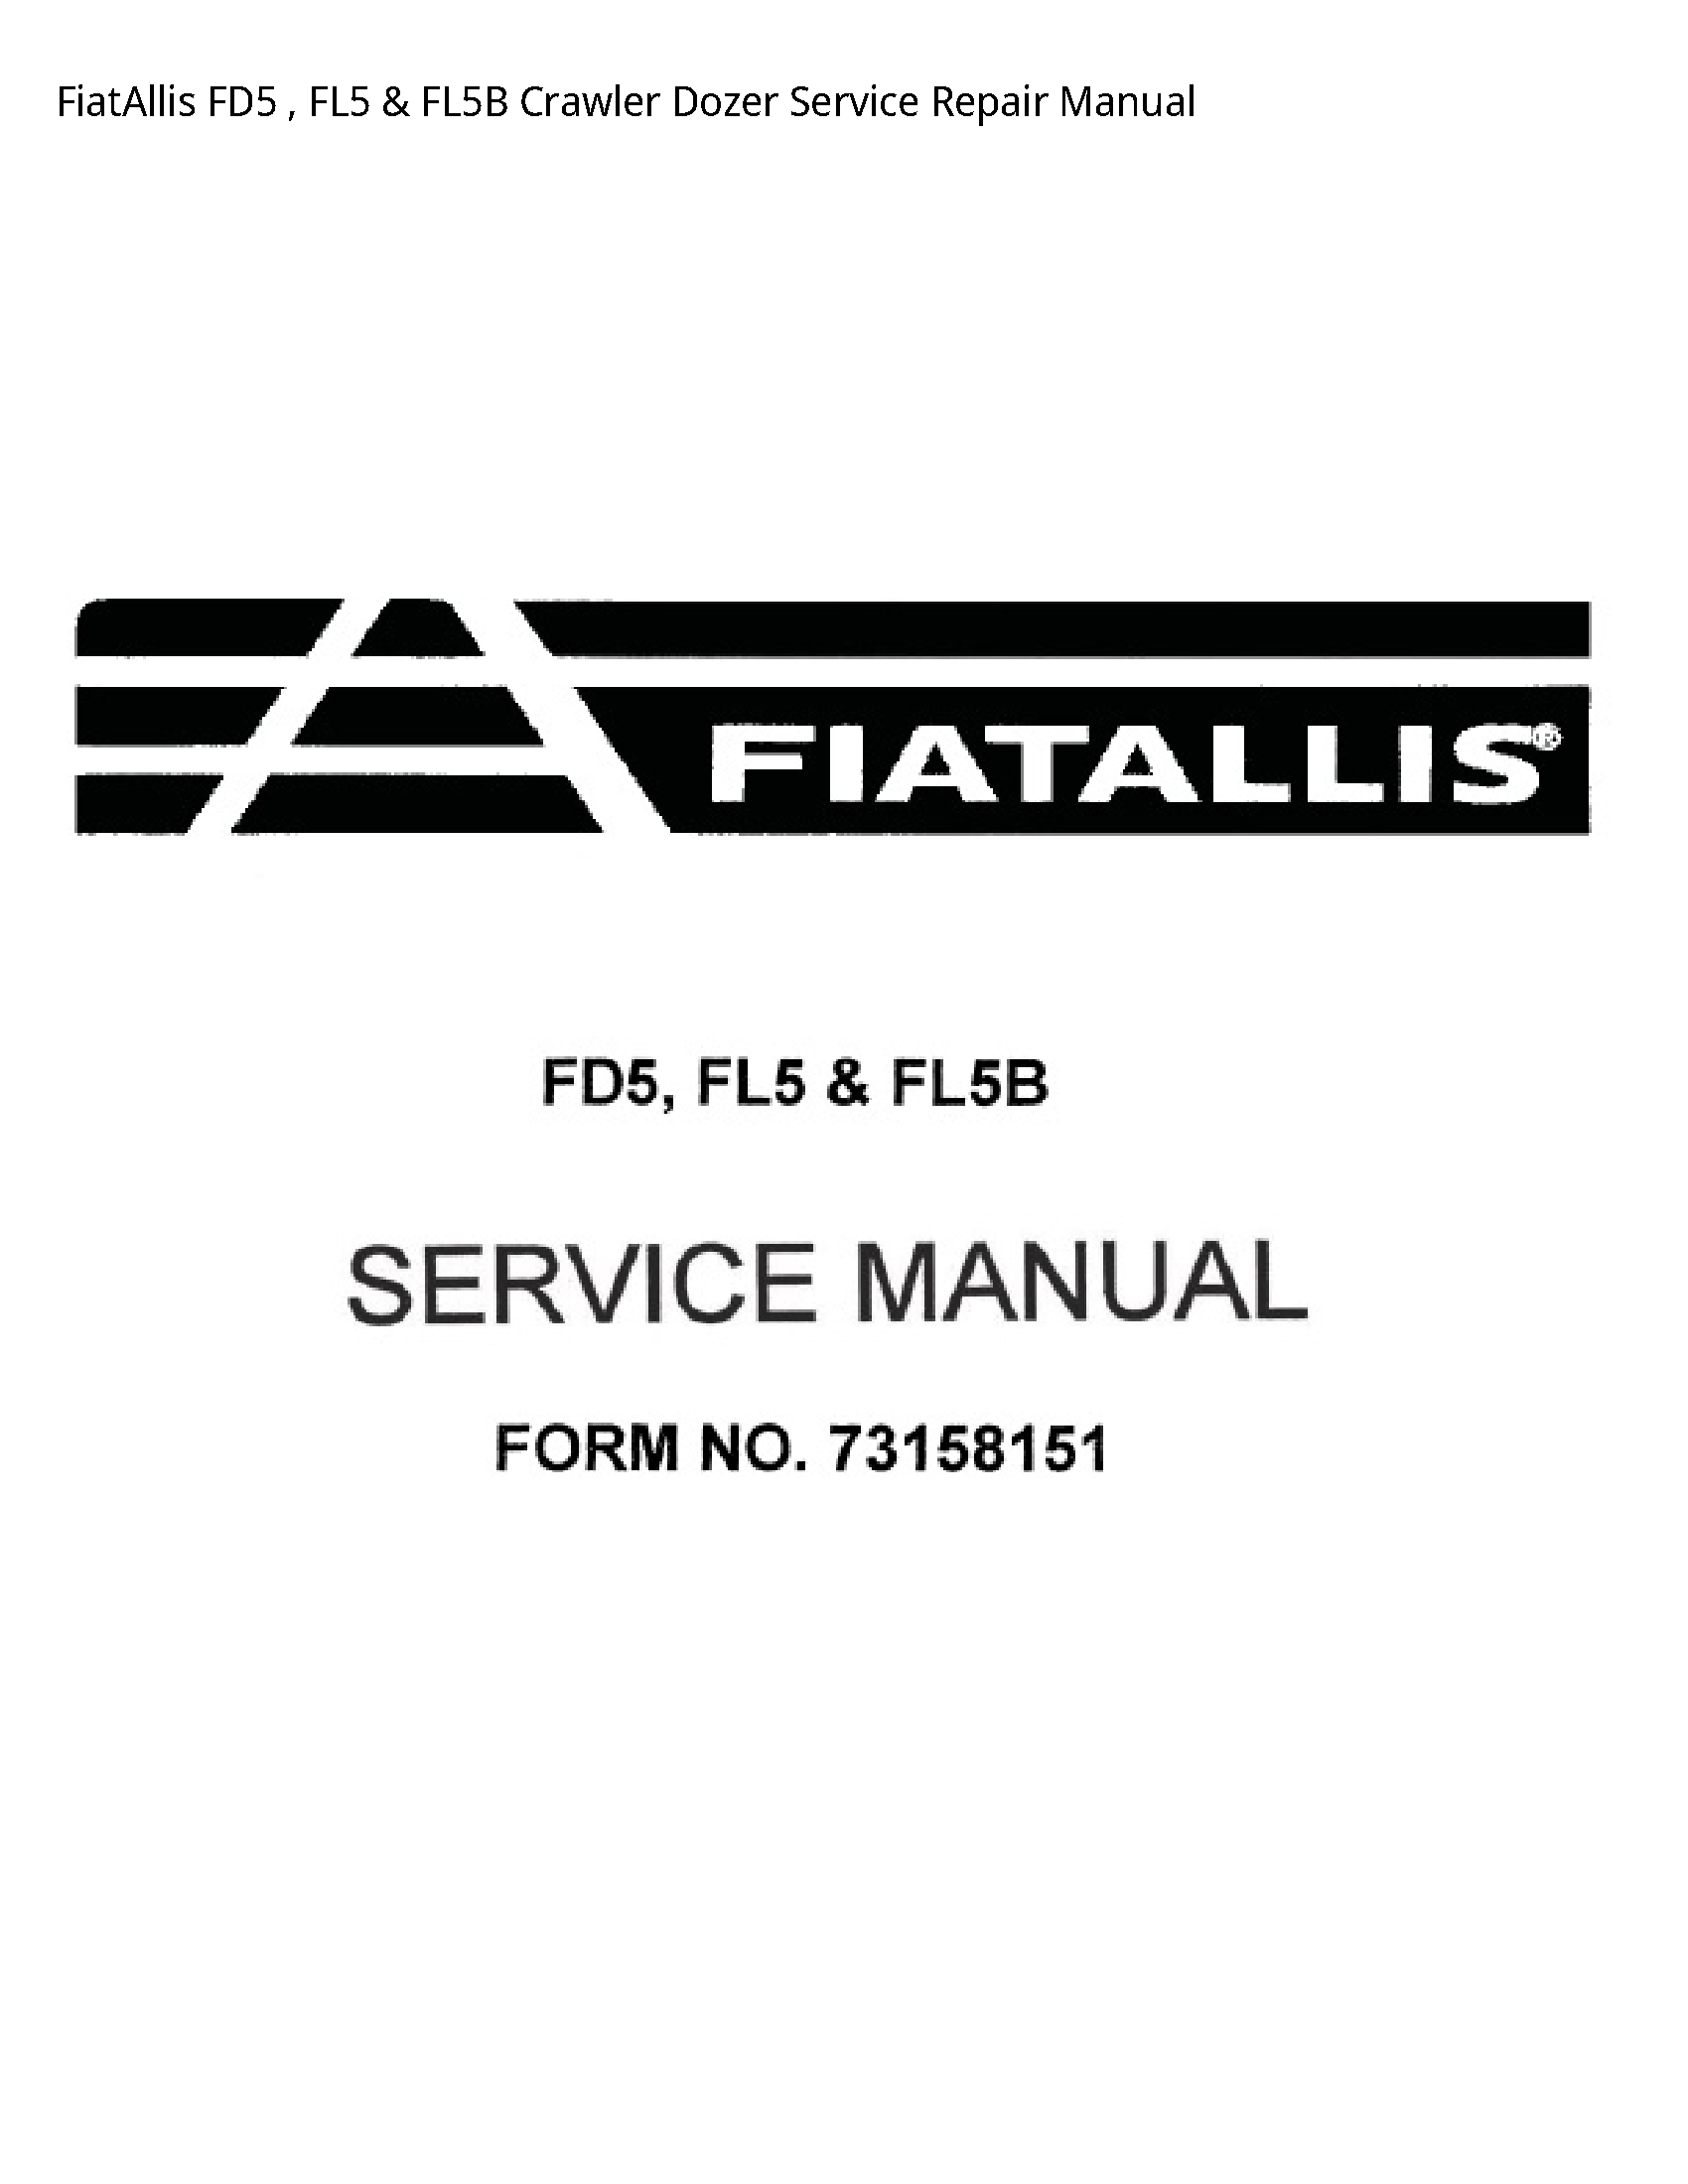 Fiatallis FD5 Crawler Dozer manual